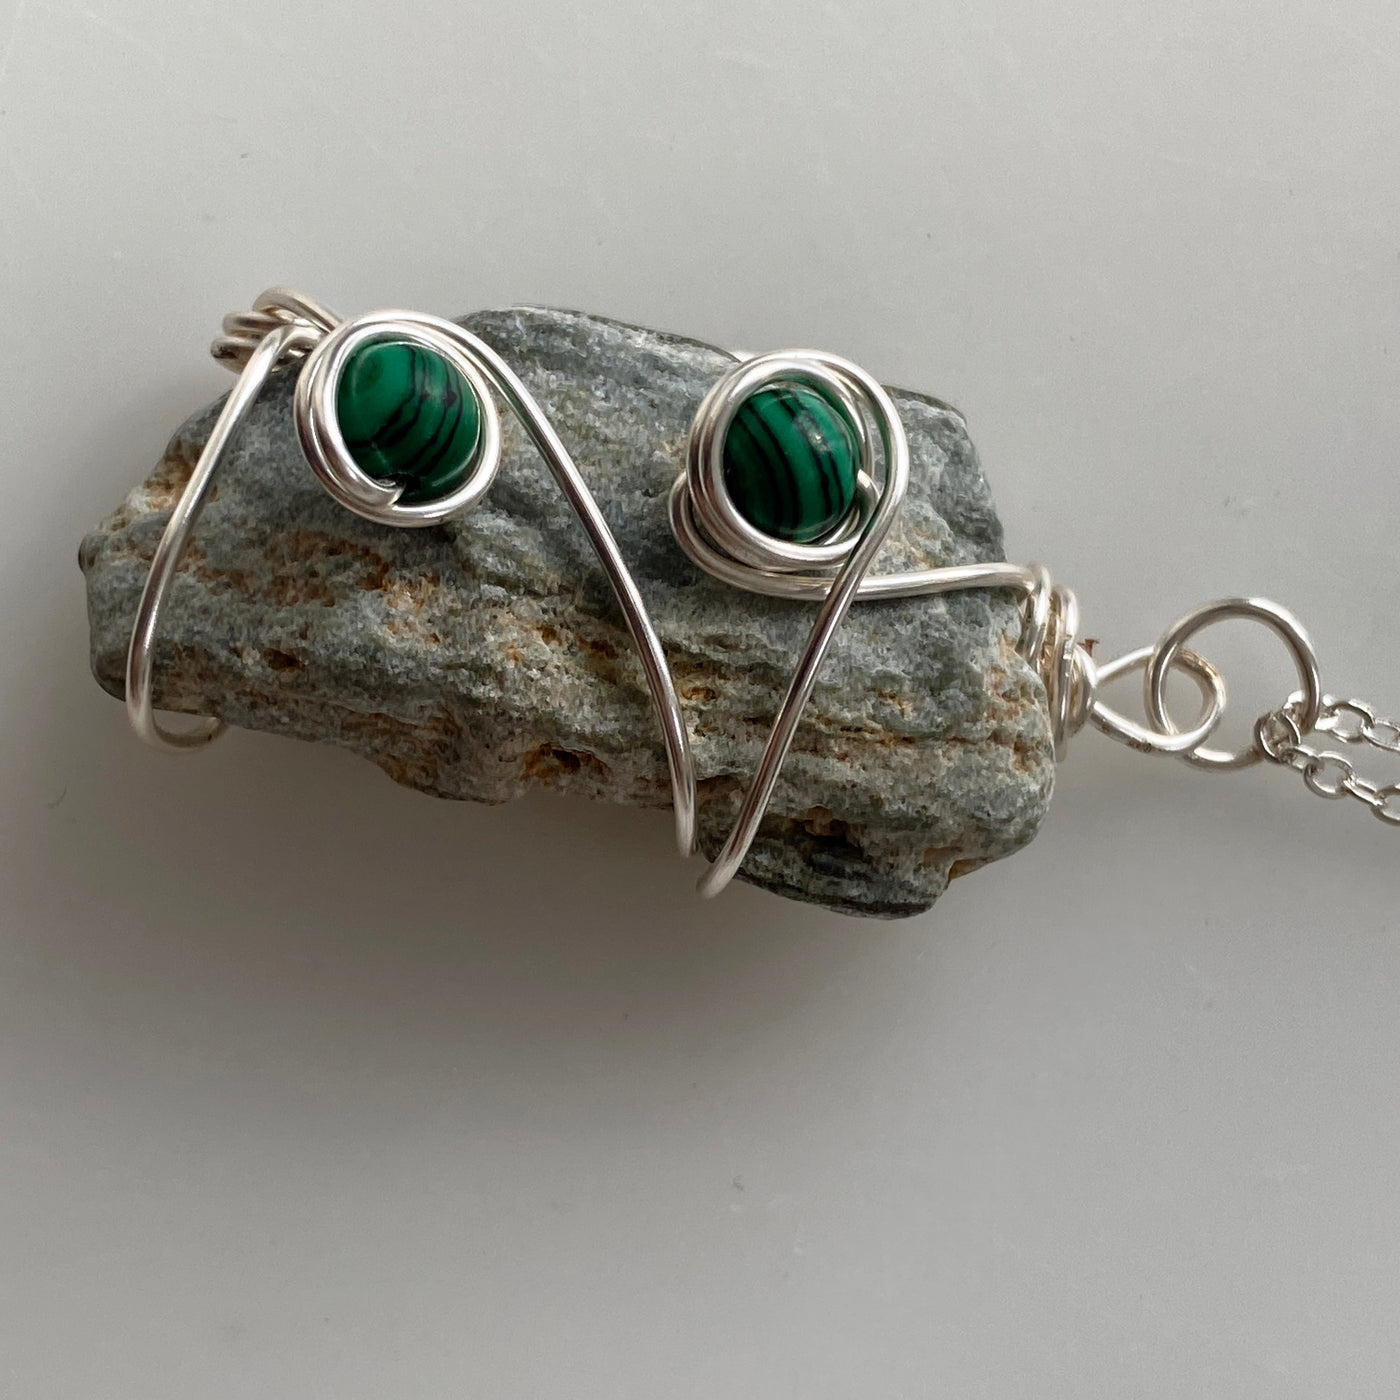 Medium Pendant. Green natural stone , malachite and silver wire in Elbastones collection.